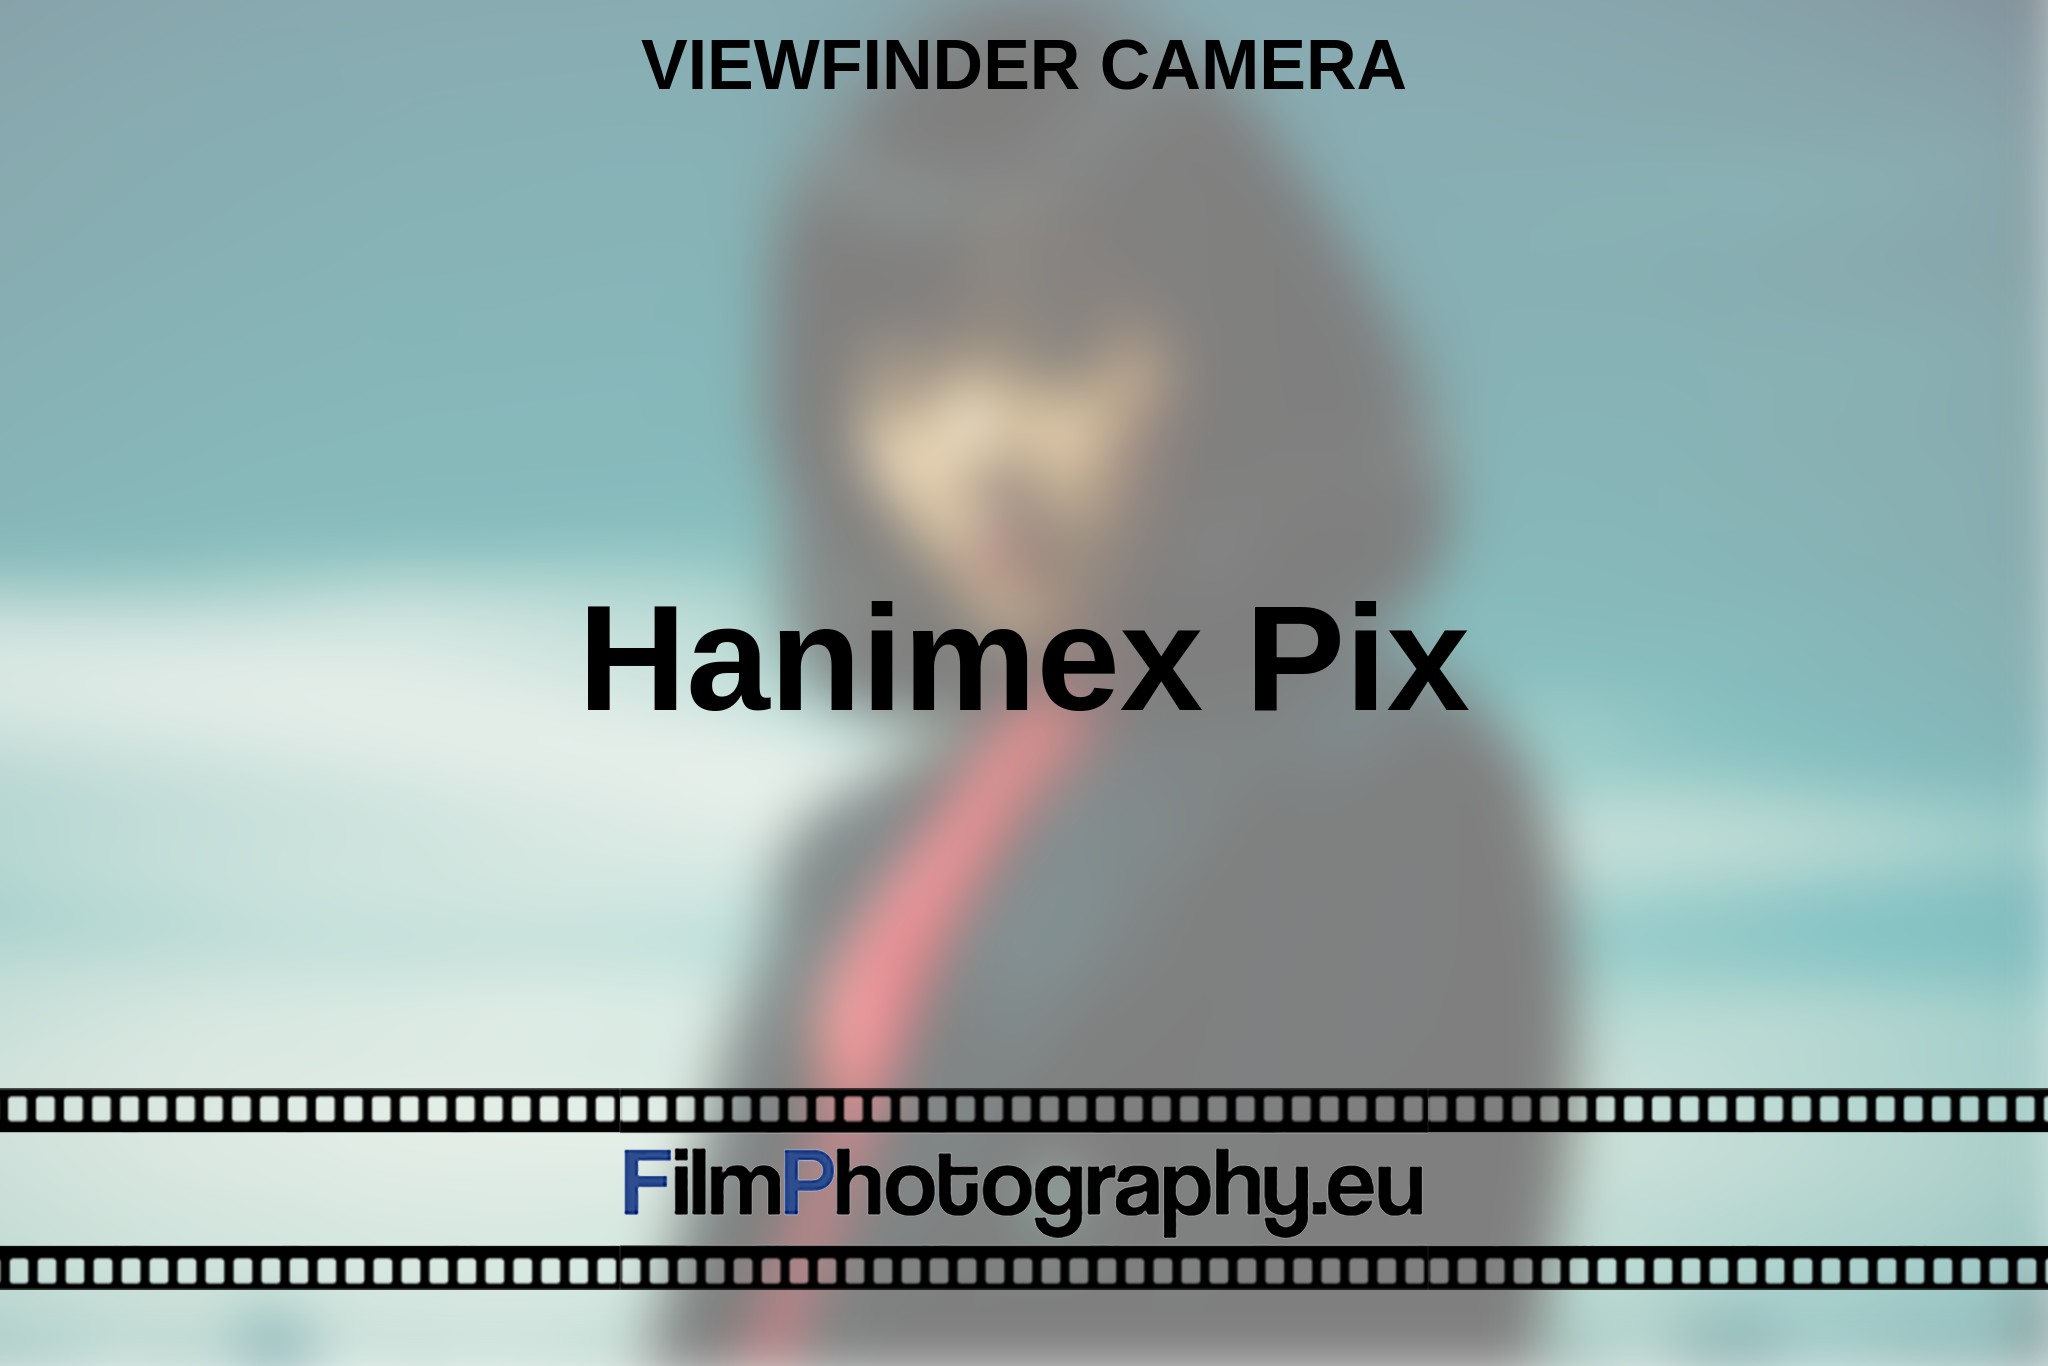 hanimex-pix-viewfinder-camera-en-bnv.jpg